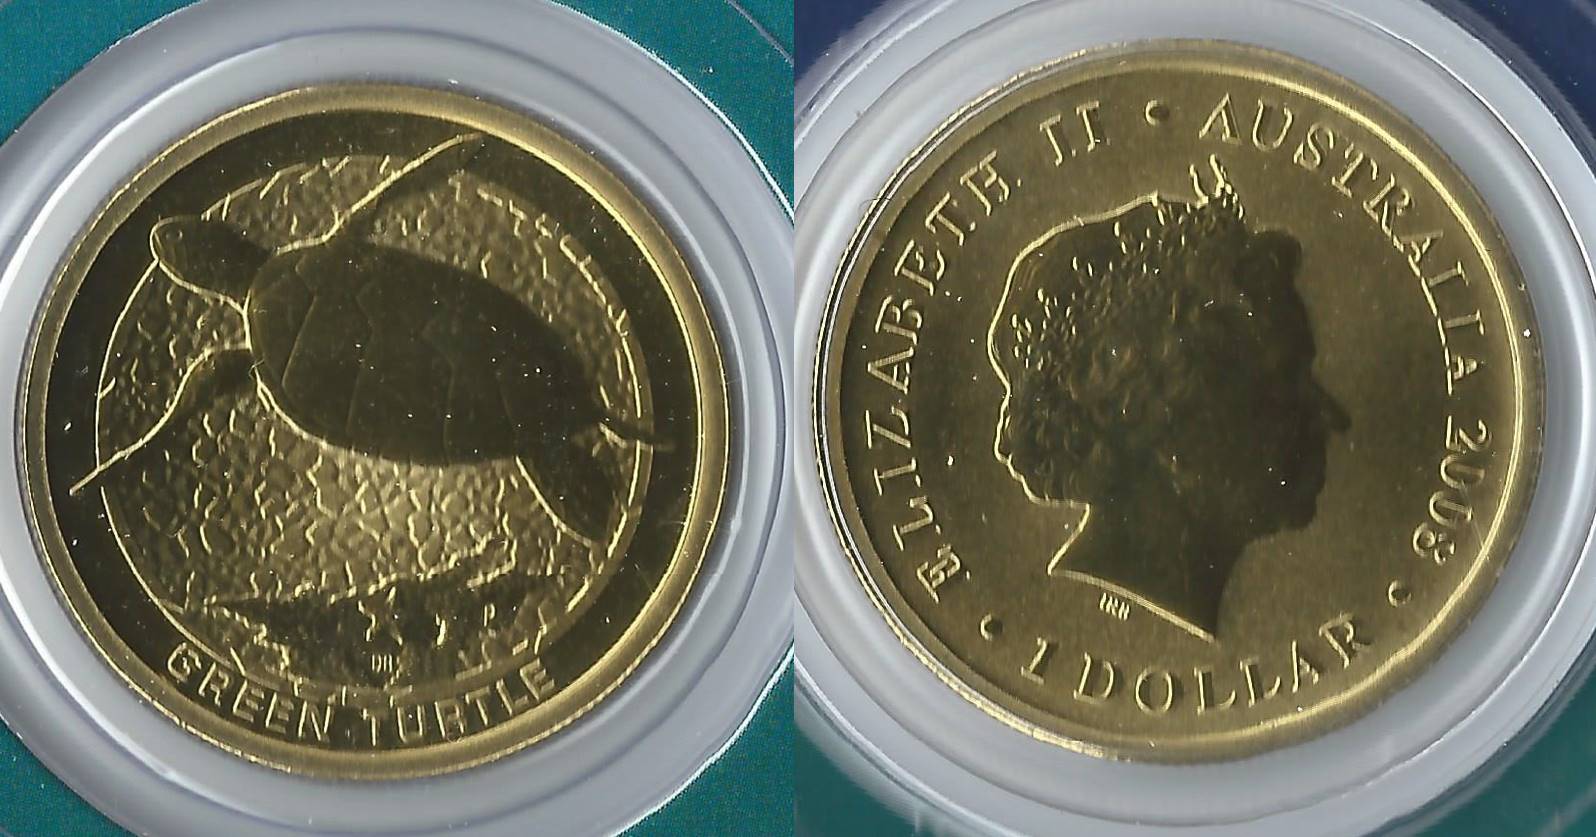 2008 australia 1 dollar.jpg